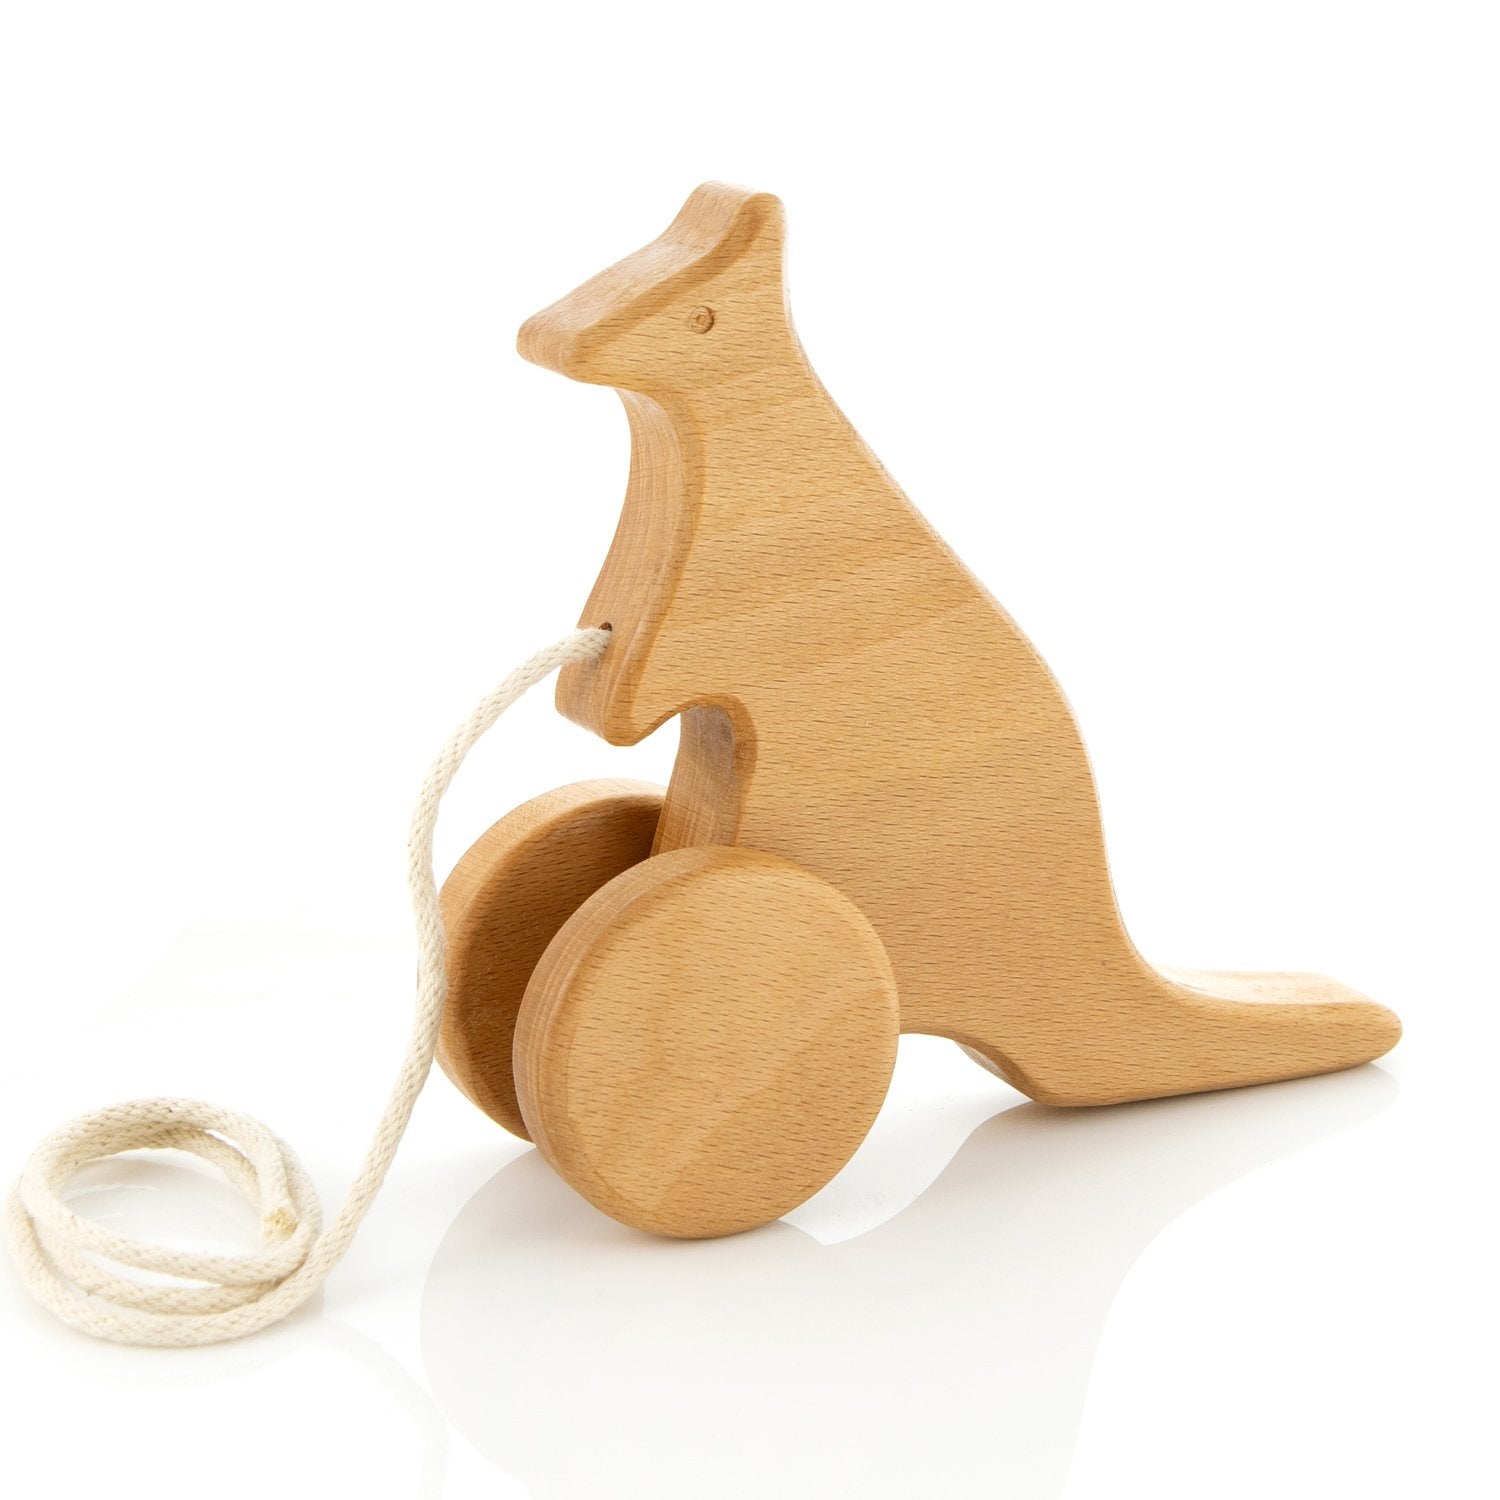 Wooden Kangaroo pulley toy